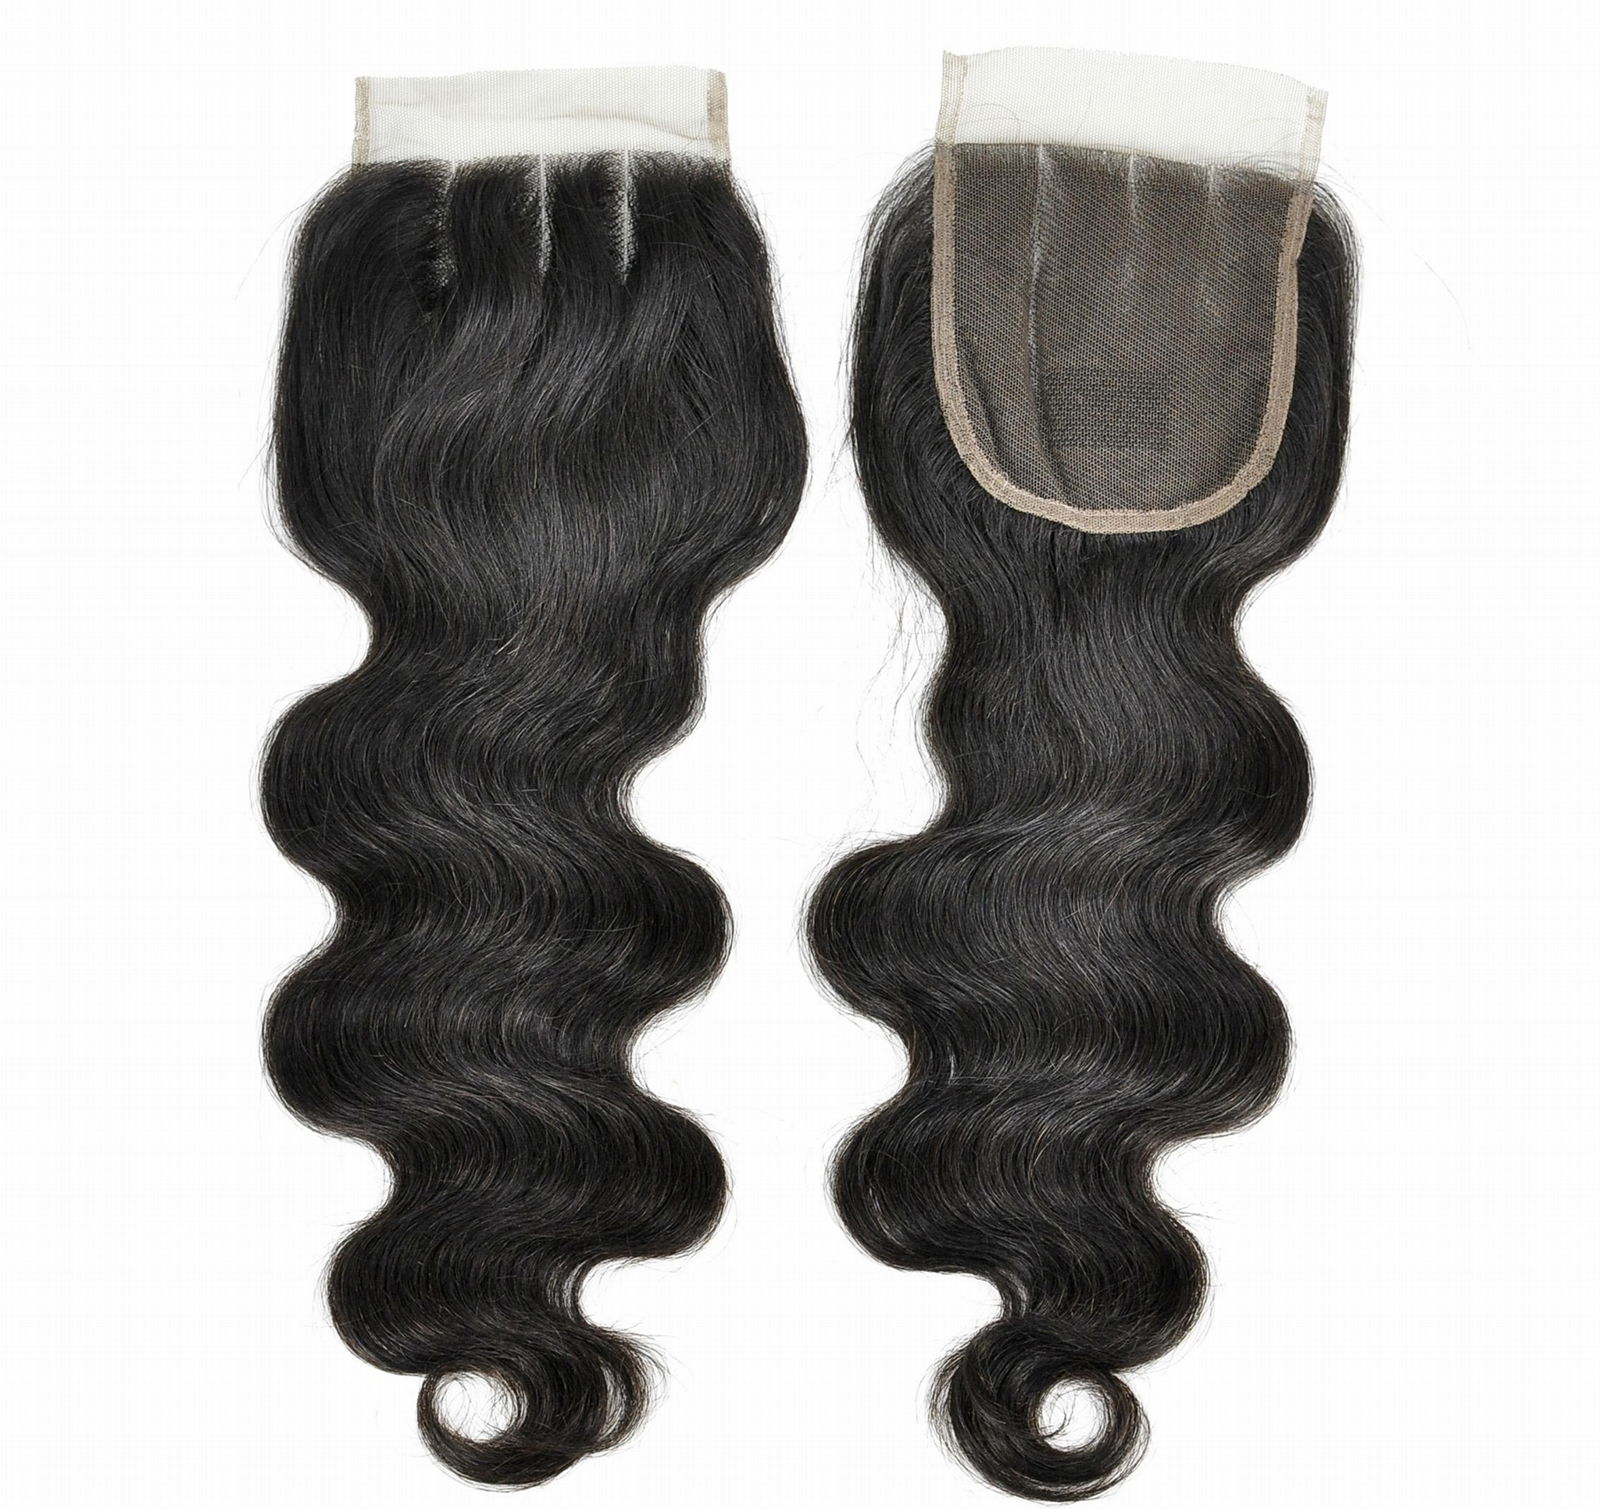 Virgin Human Hair Lace Closure at Wholesale Price (Body Wave) 3